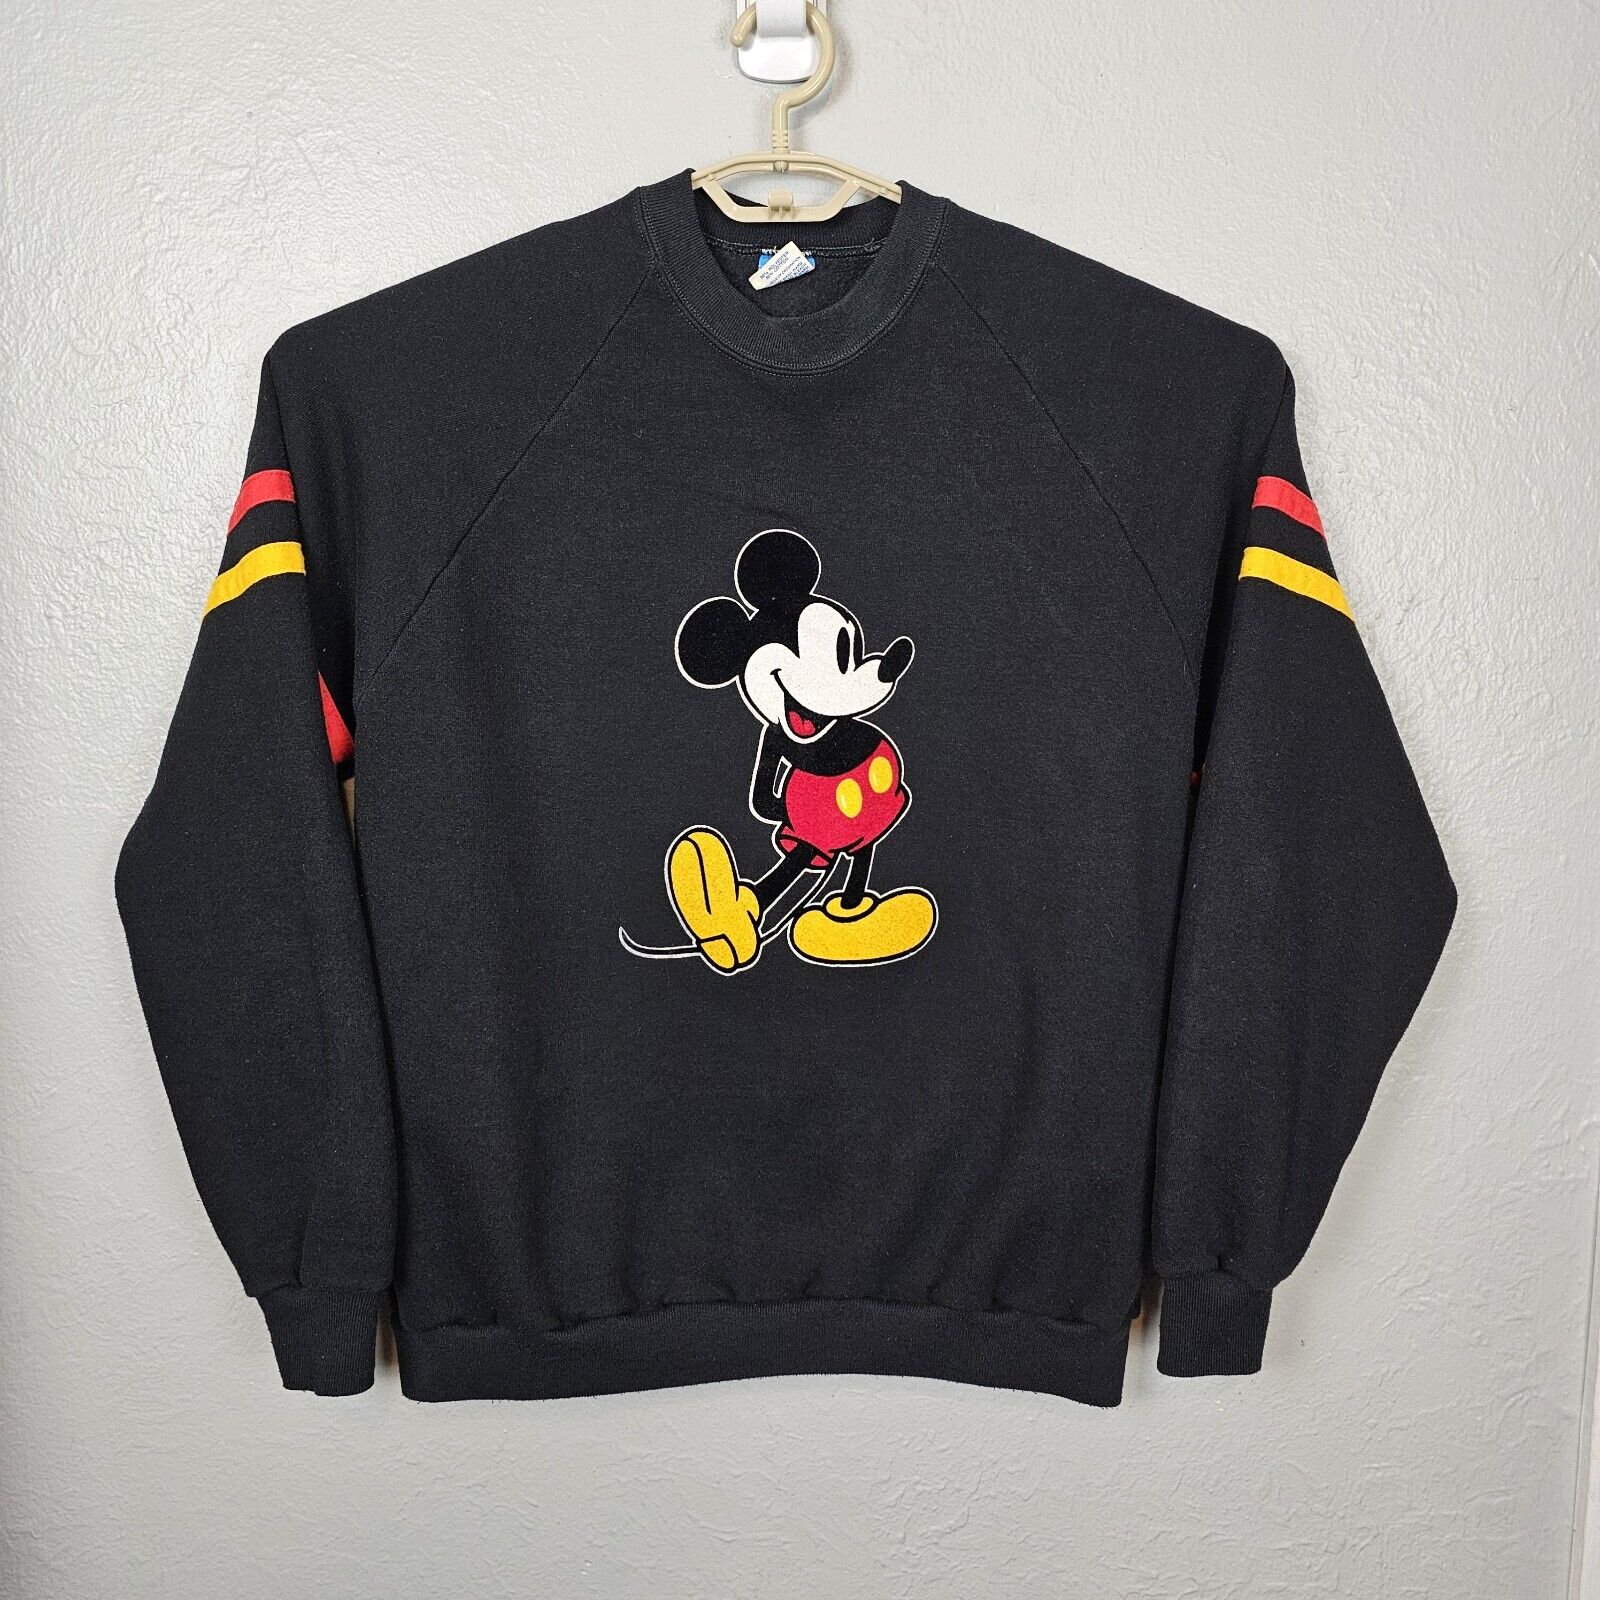 Vtg 80s 90s Mickey Mouse Disney Character Fashion Black Sweatshirt Size S/M